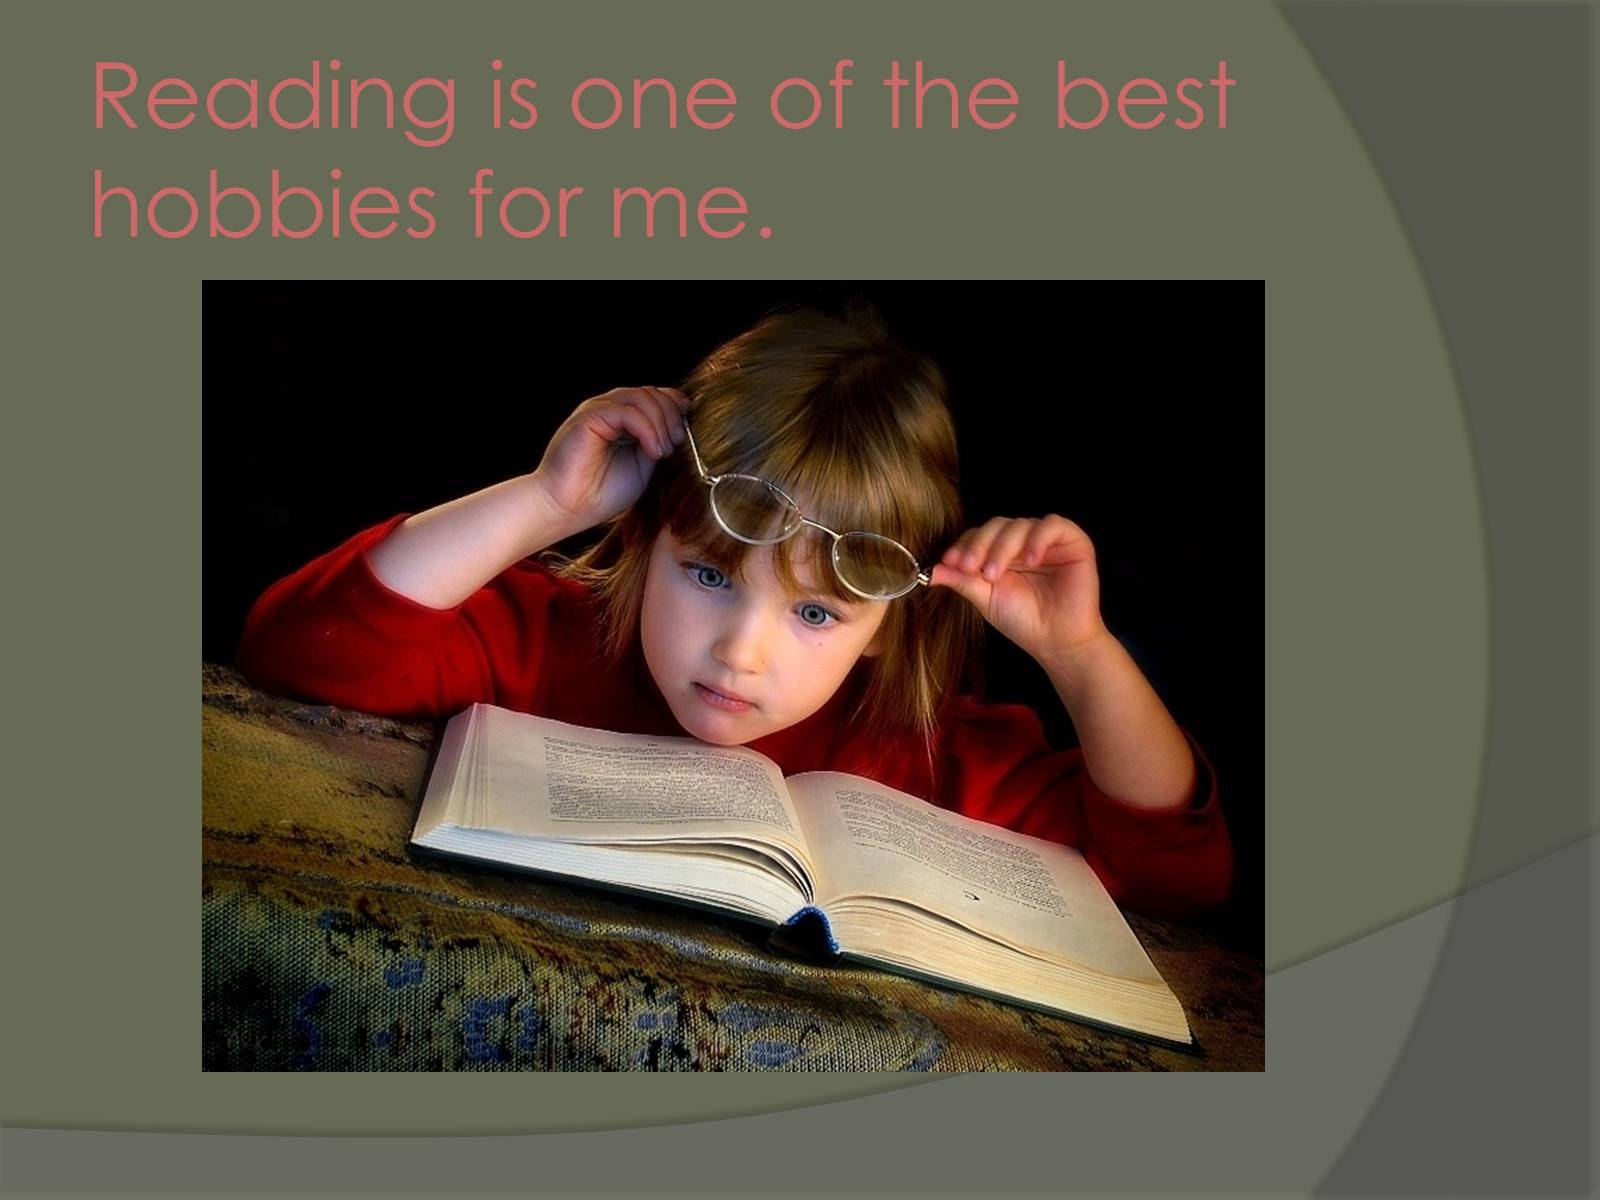 I read them. Хобби книги на английском. Книги для детей об увлечениях. Мое хобби чтение. Проект мое хобби чтение.